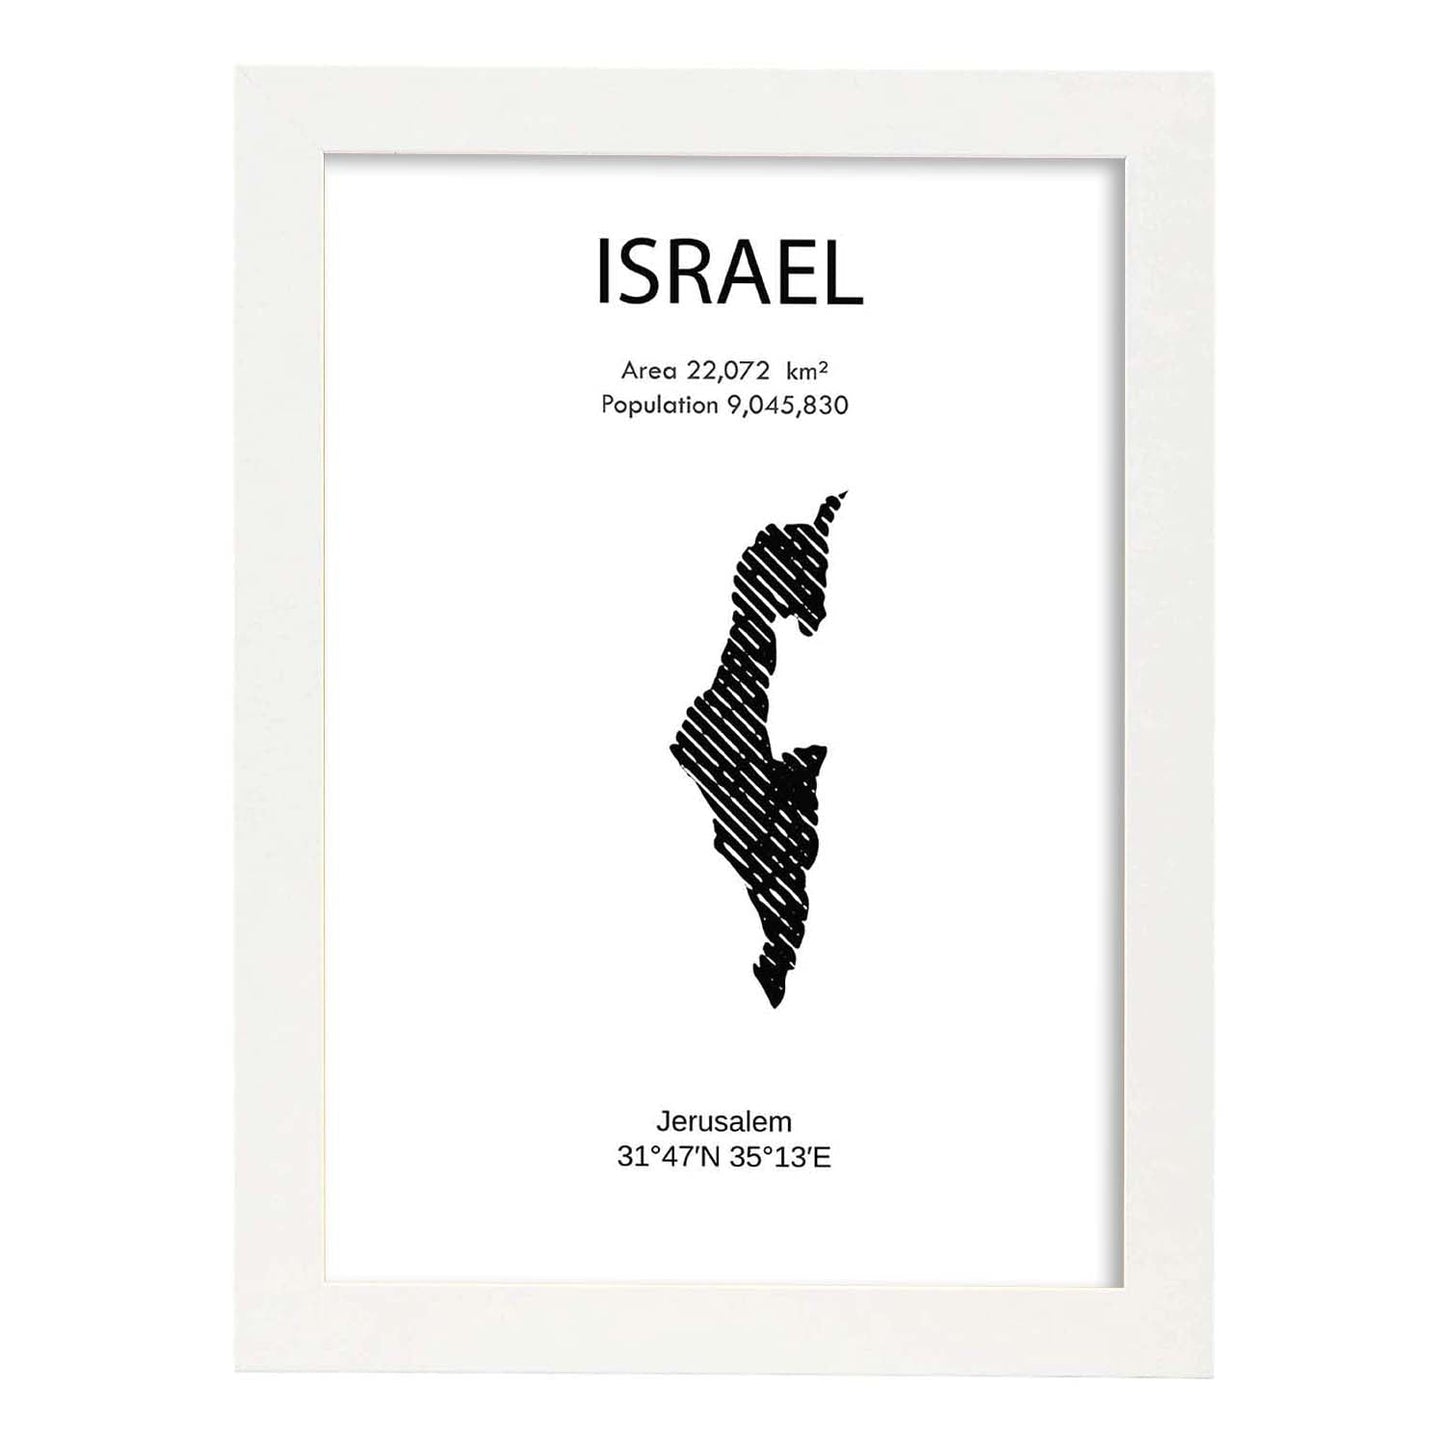 Poster de Israel. Láminas de paises y continentes del mundo.-Artwork-Nacnic-A4-Marco Blanco-Nacnic Estudio SL